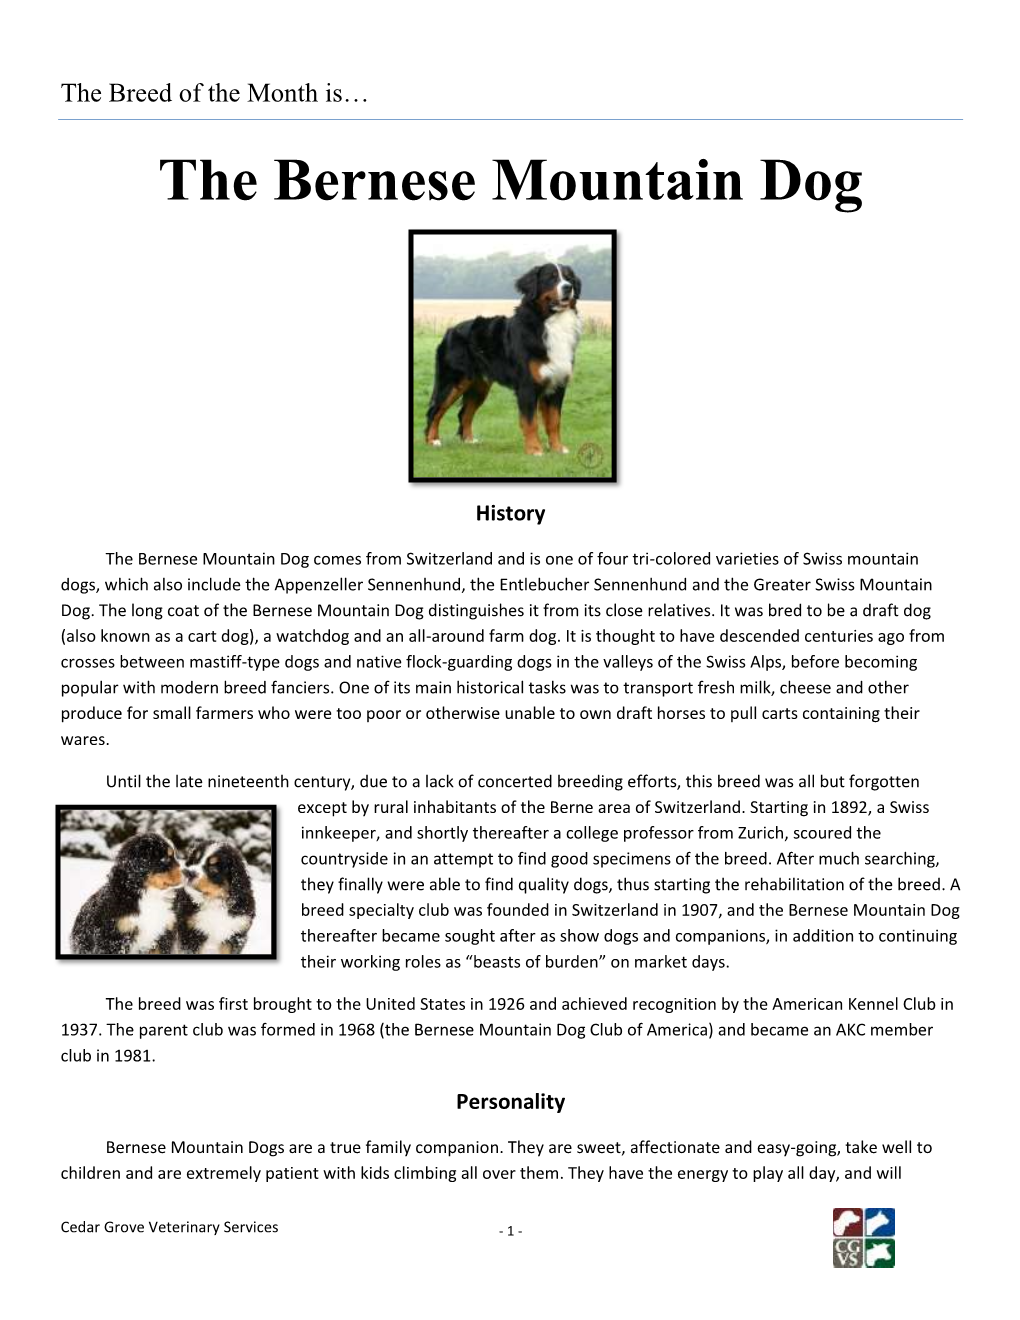 The Bernese Mountain Dog